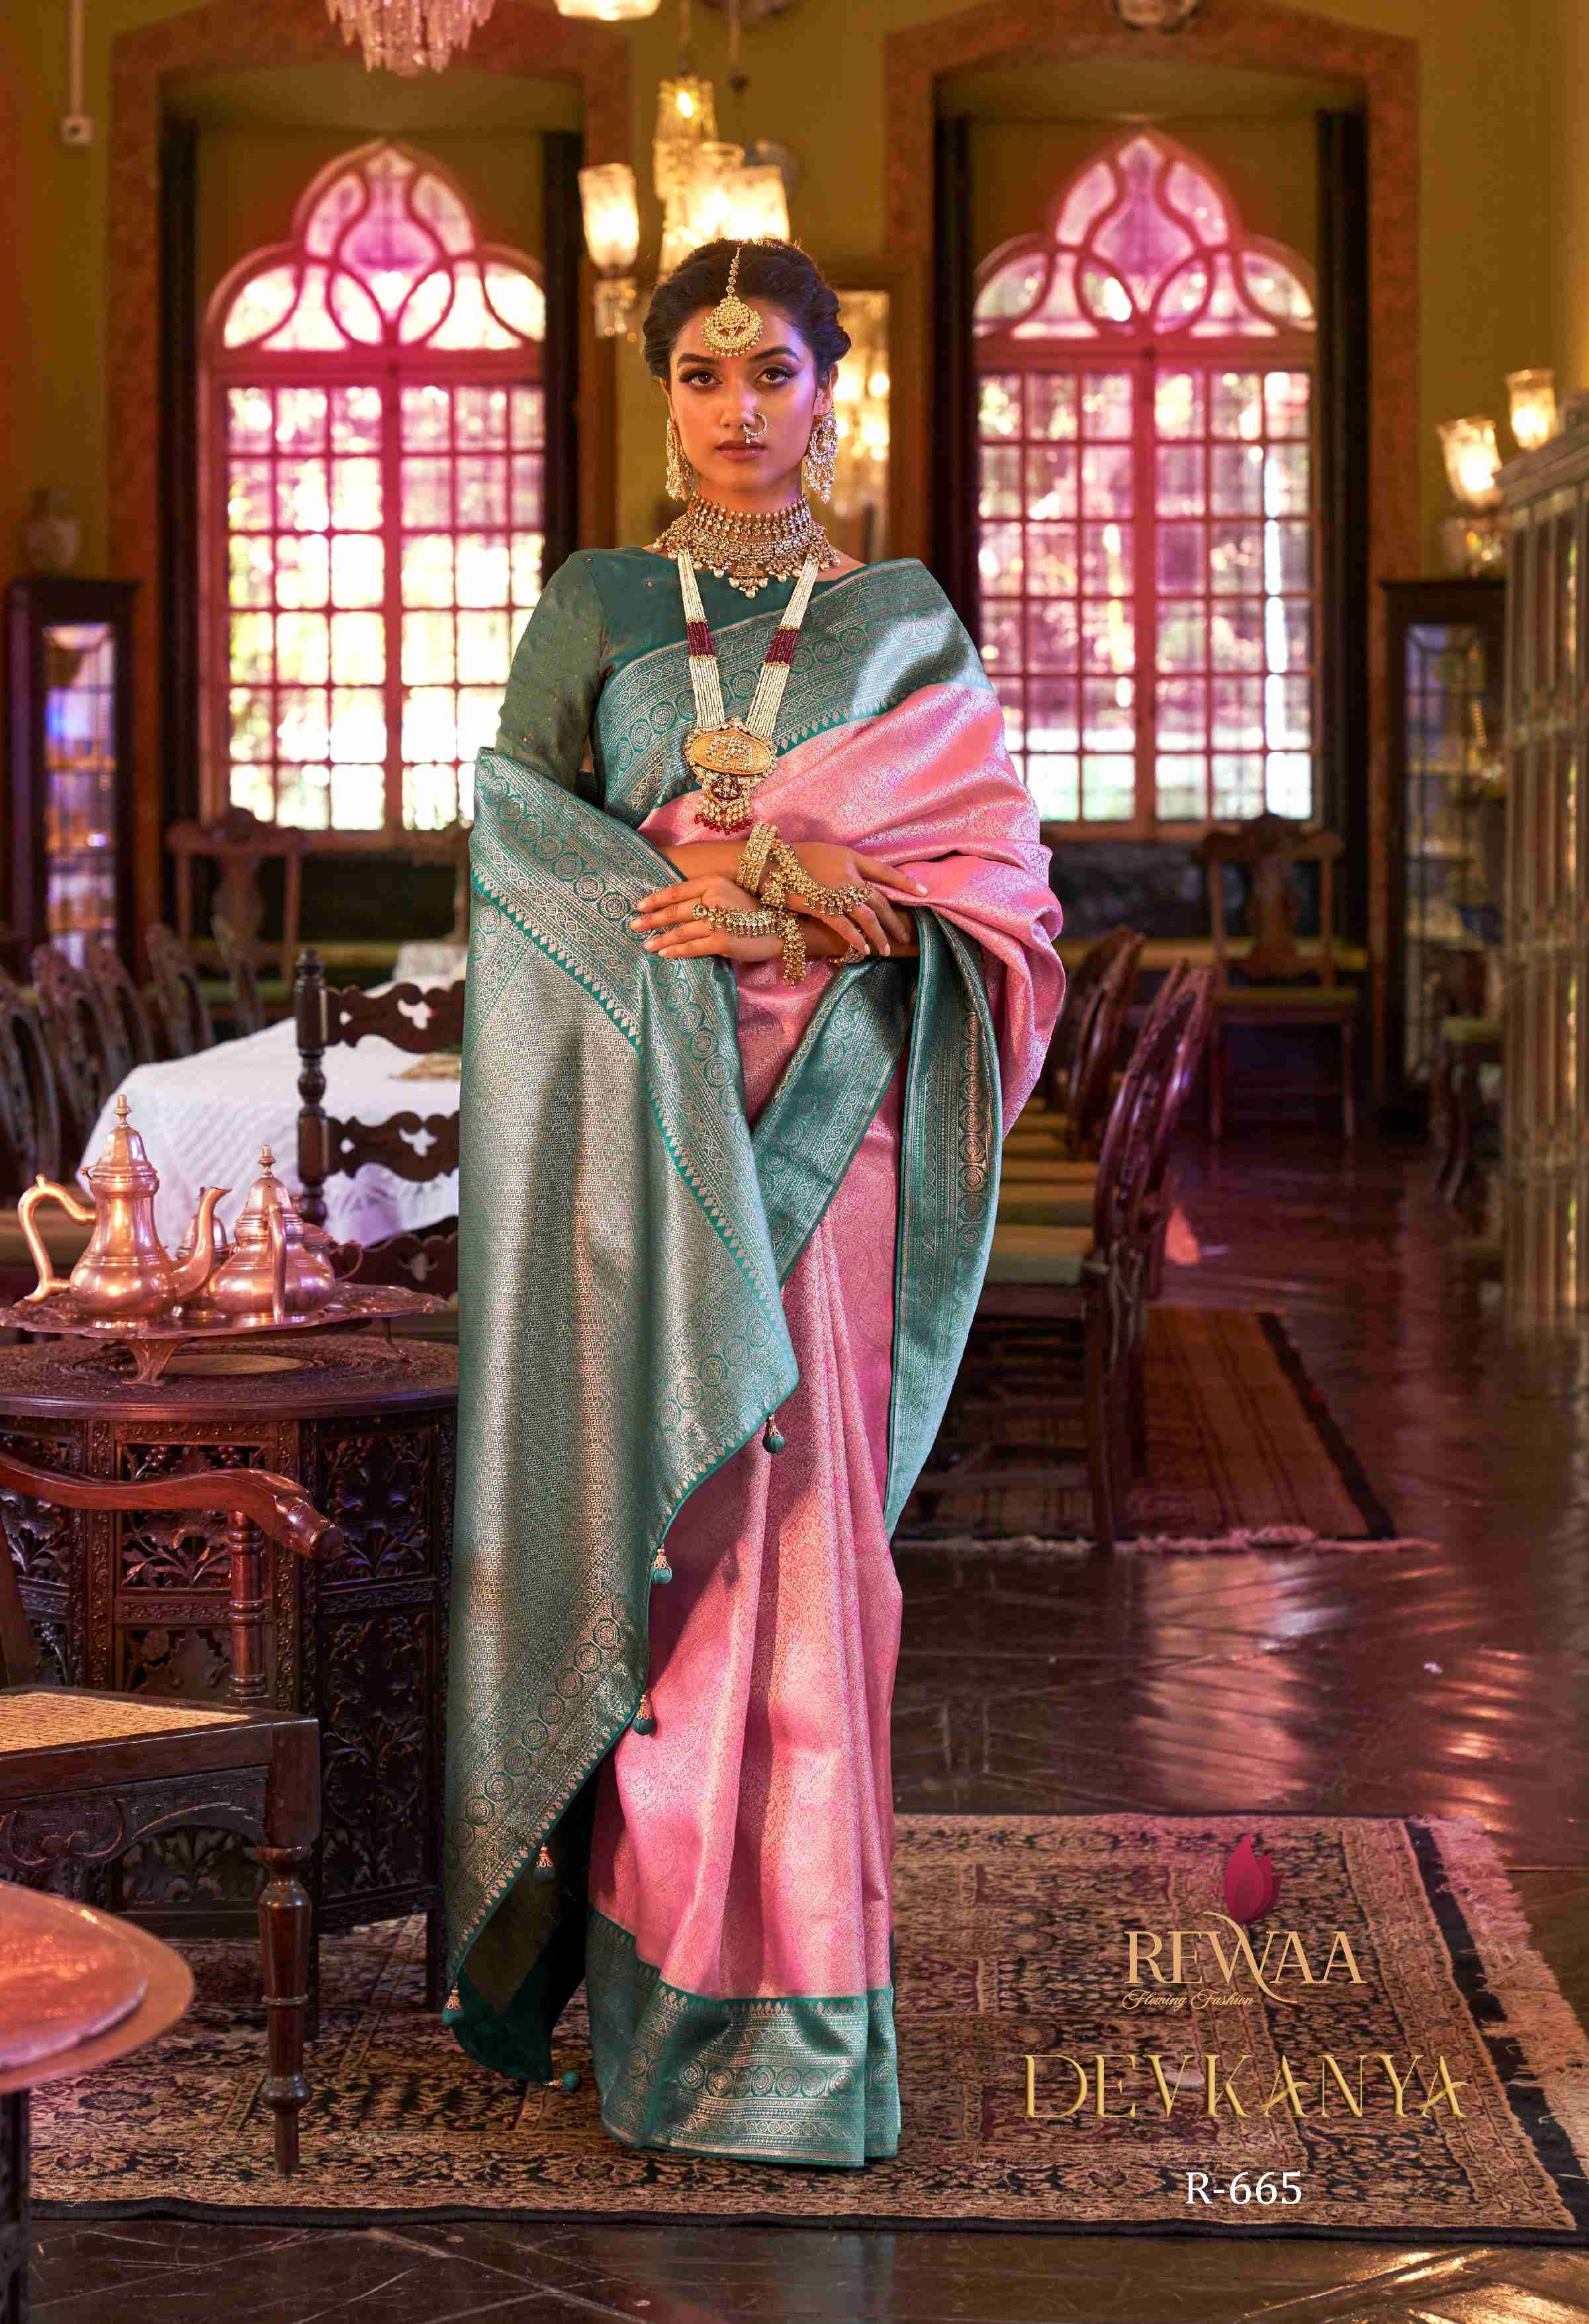 Handloom cotton sari styles for hot summer months